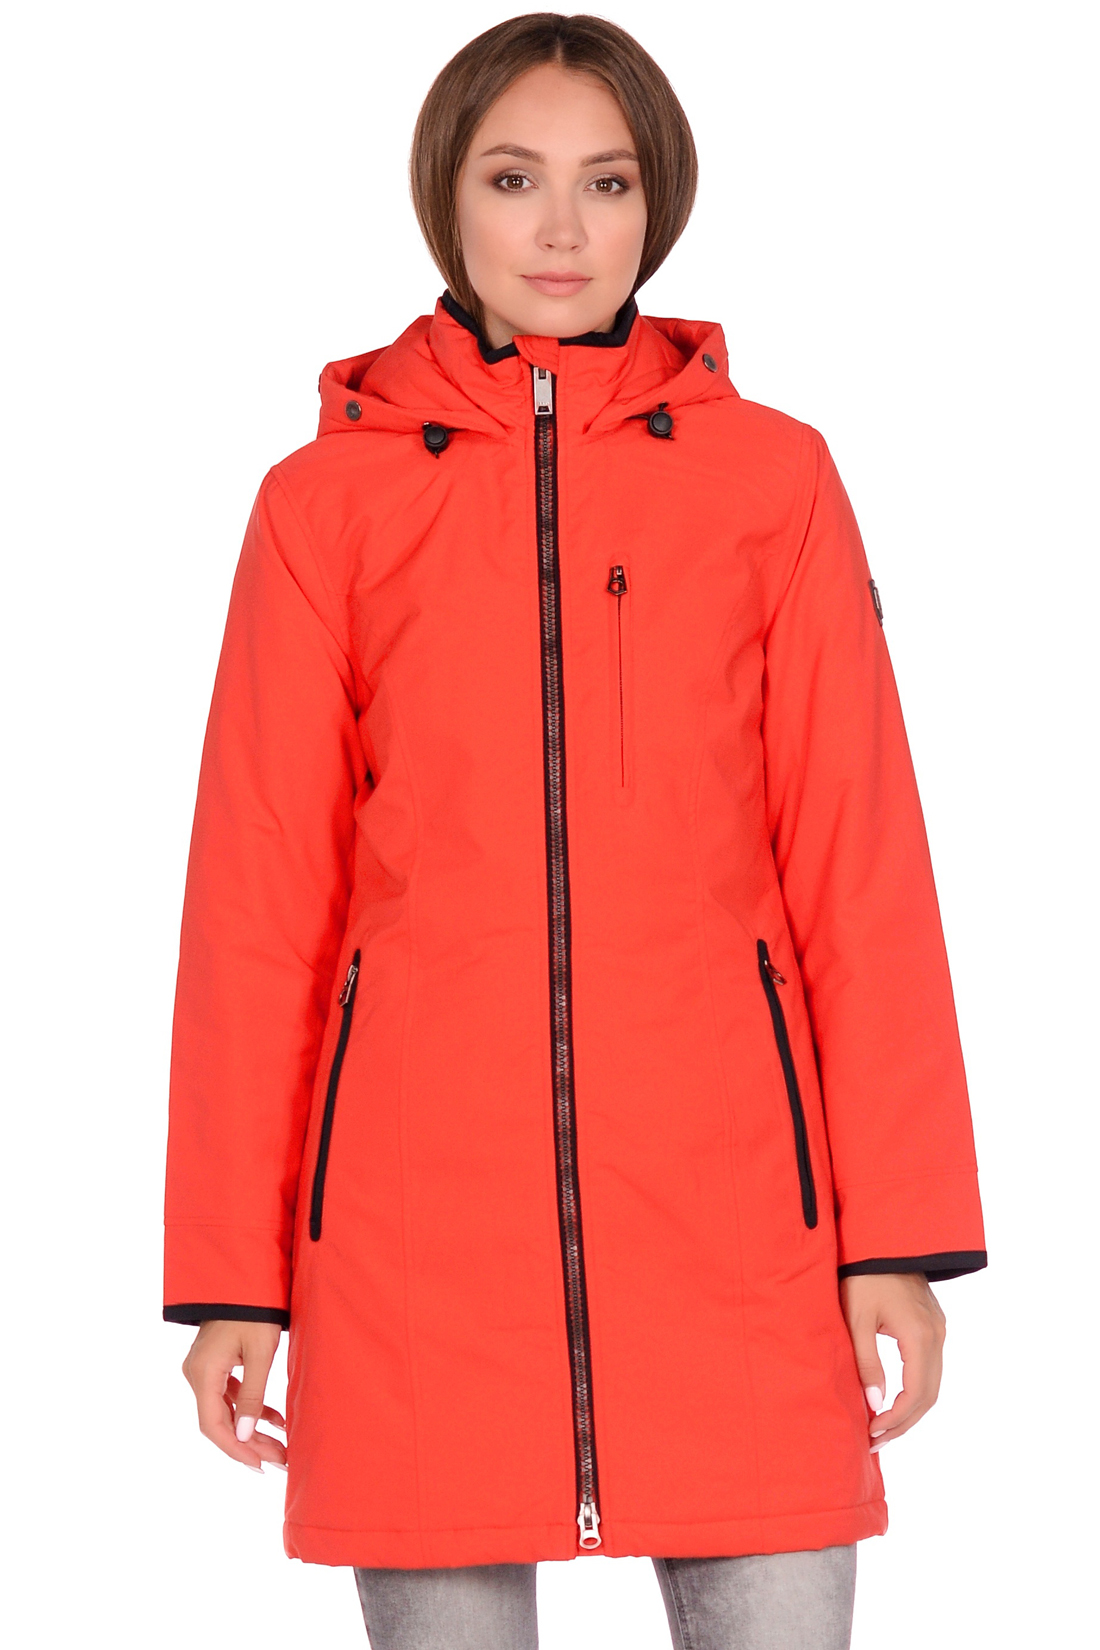 Куртка со стёганой подкладкой (арт. baon B038532), размер XXL, цвет красный Куртка со стёганой подкладкой (арт. baon B038532) - фото 6